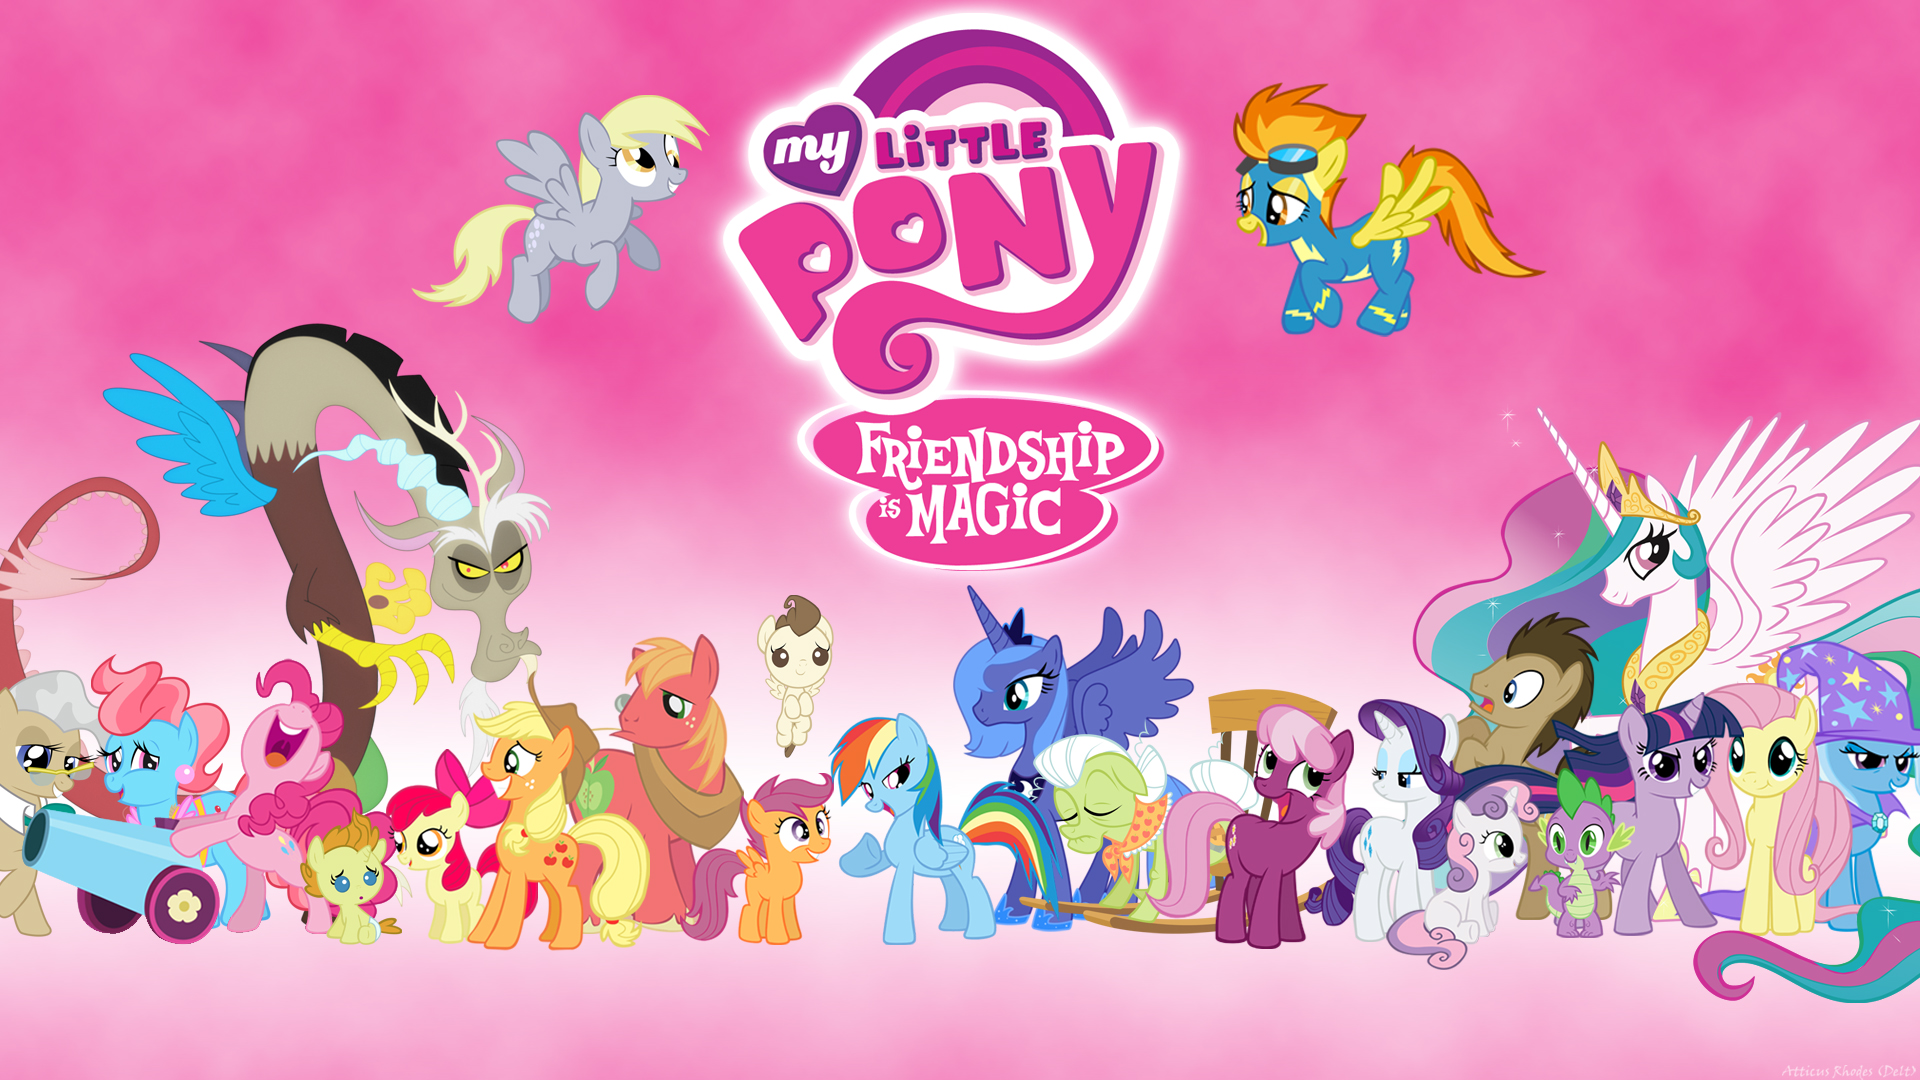 My Little Pony: Friendship is Magic - wide 6